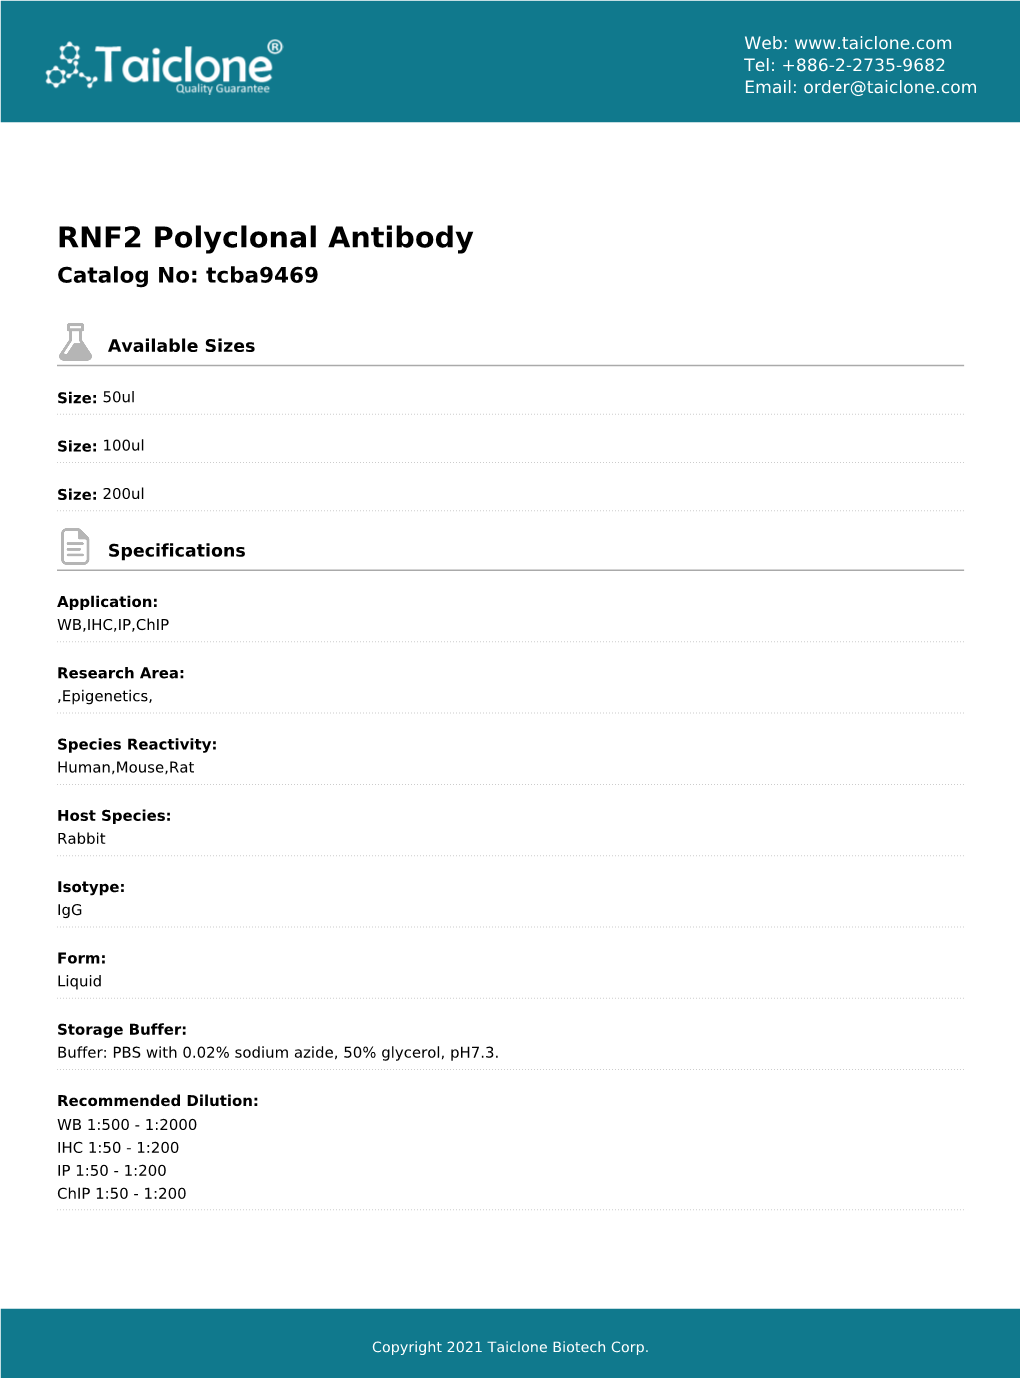 RNF2 Polyclonal Antibody Catalog No: Tcba9469